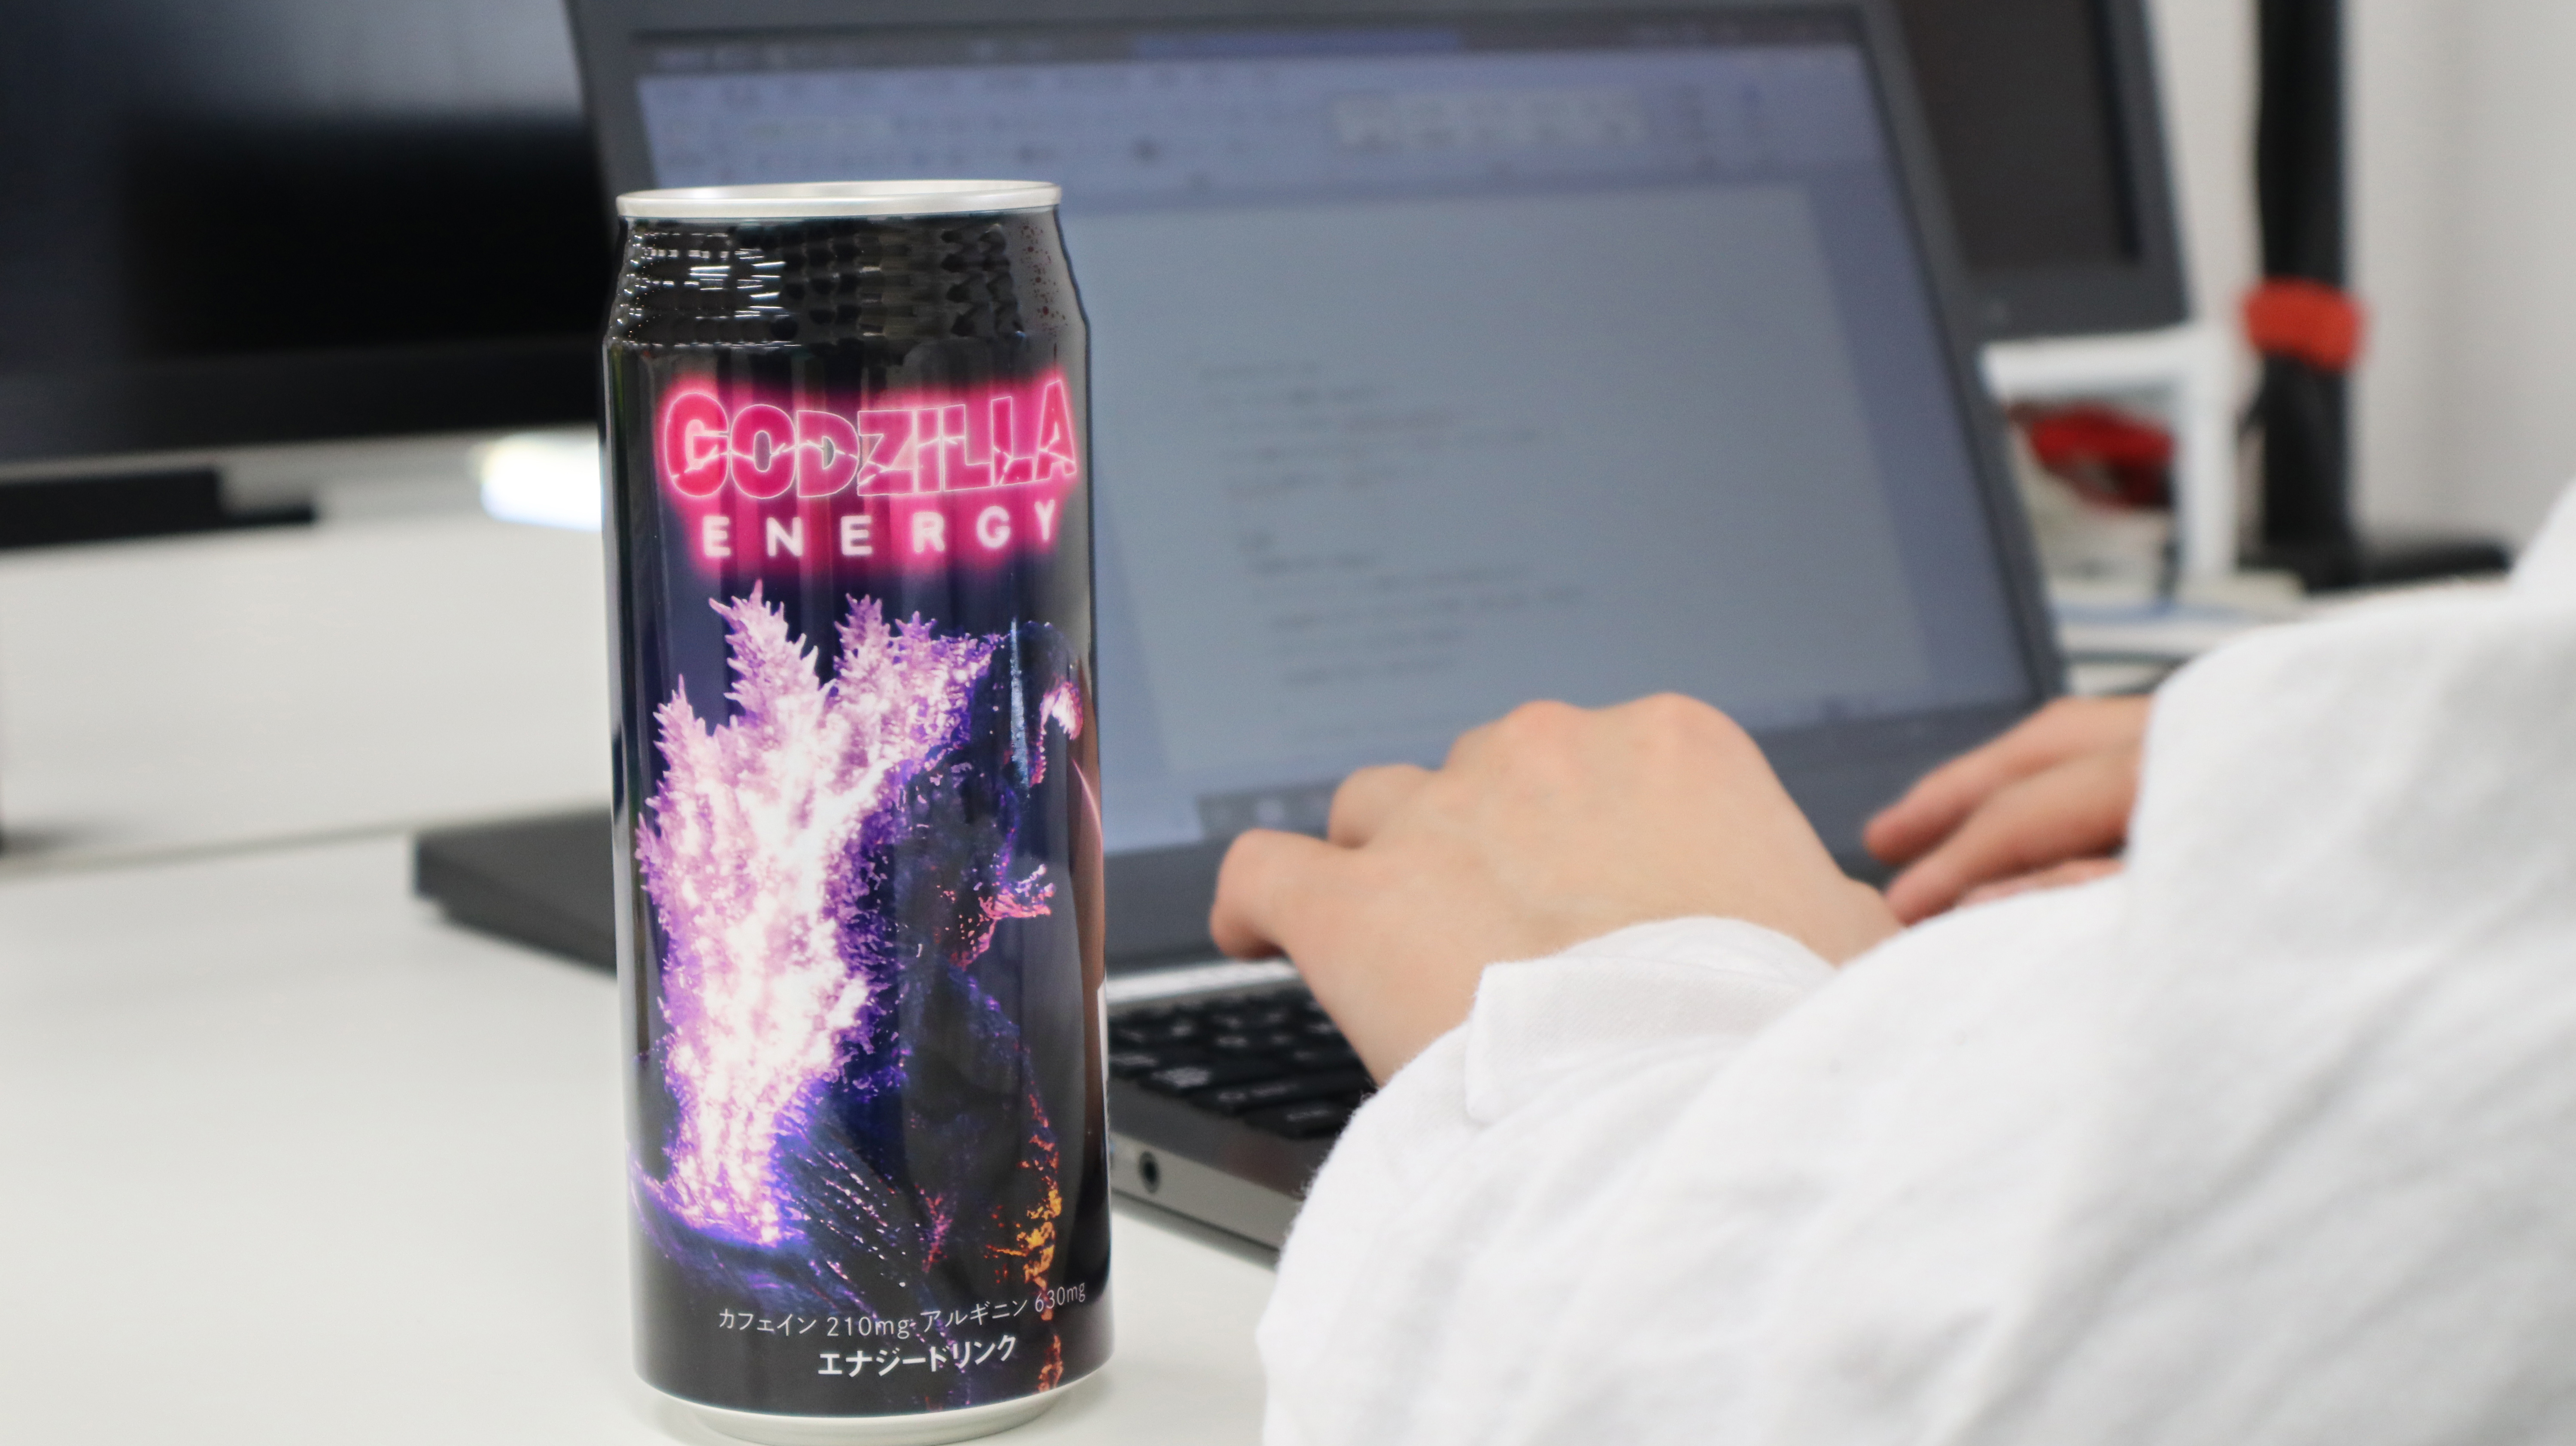 Power up like Godzilla with new limited-edition Godzilla Energy Drink |  SoraNews24 -Japan News-